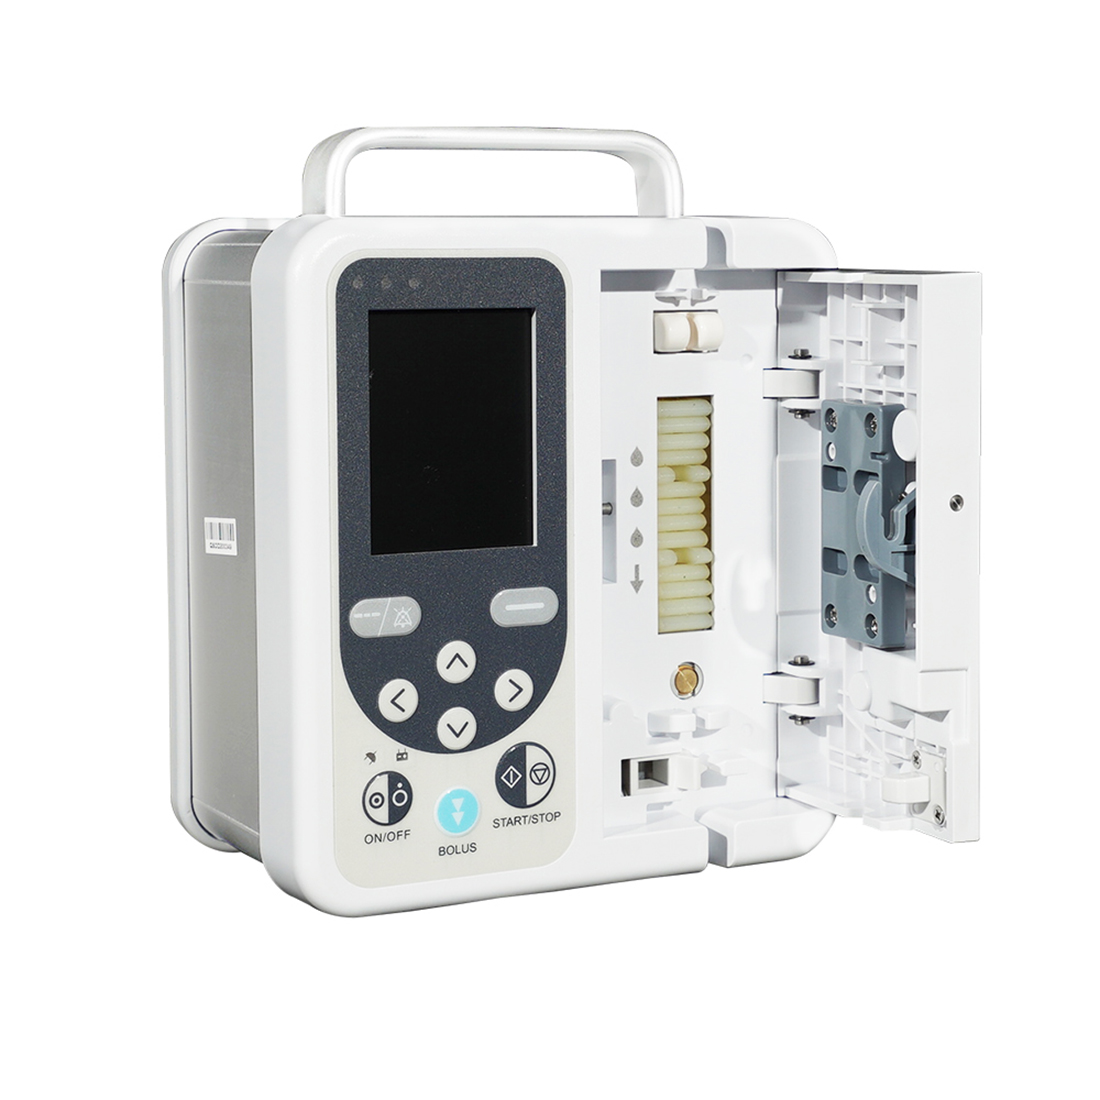 AMAIN Portable Volumetric Infusion Pump AMSP750 Top IV Medical Pump for Veterinary Use